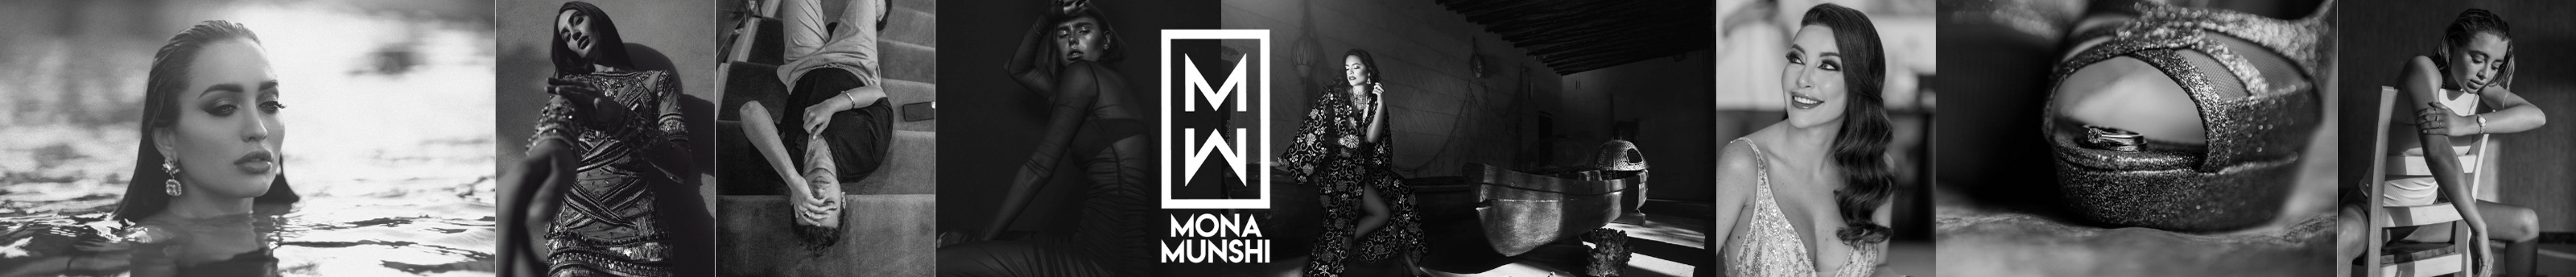 Mona Munshi's profile banner